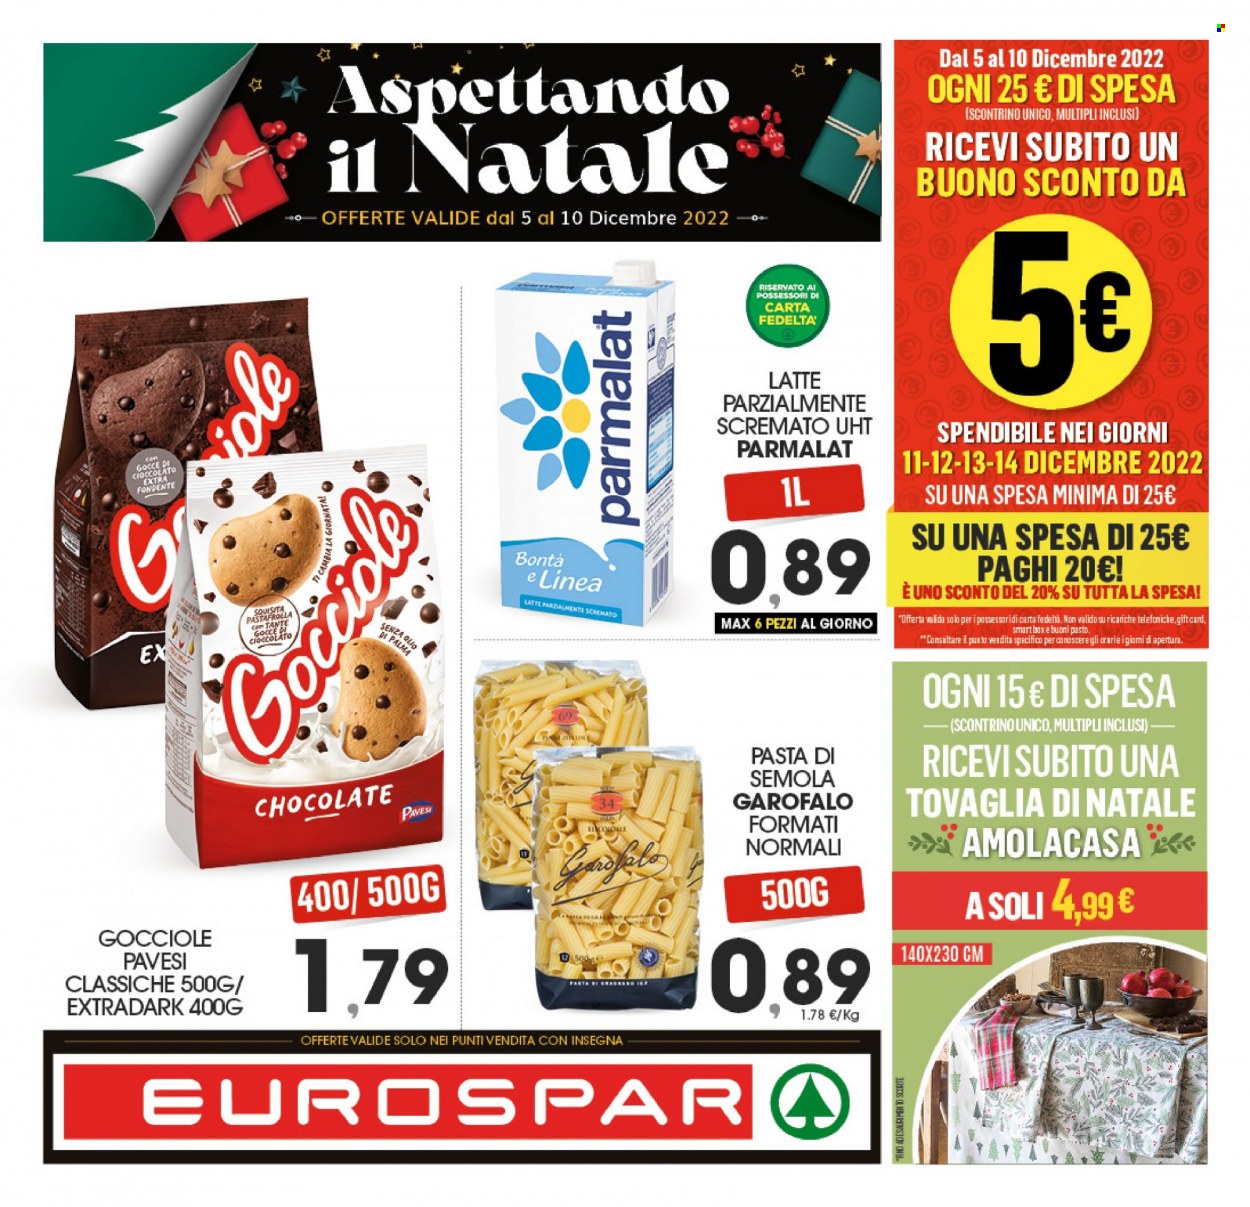 thumbnail - Volantino Eurospar - 5/12/2022 - 10/12/2022 - Prodotti in offerta - Parmalat, latte parzialmente scremato, Pavesi, Garofalo, pasta, tovaglia. Pagina 1.